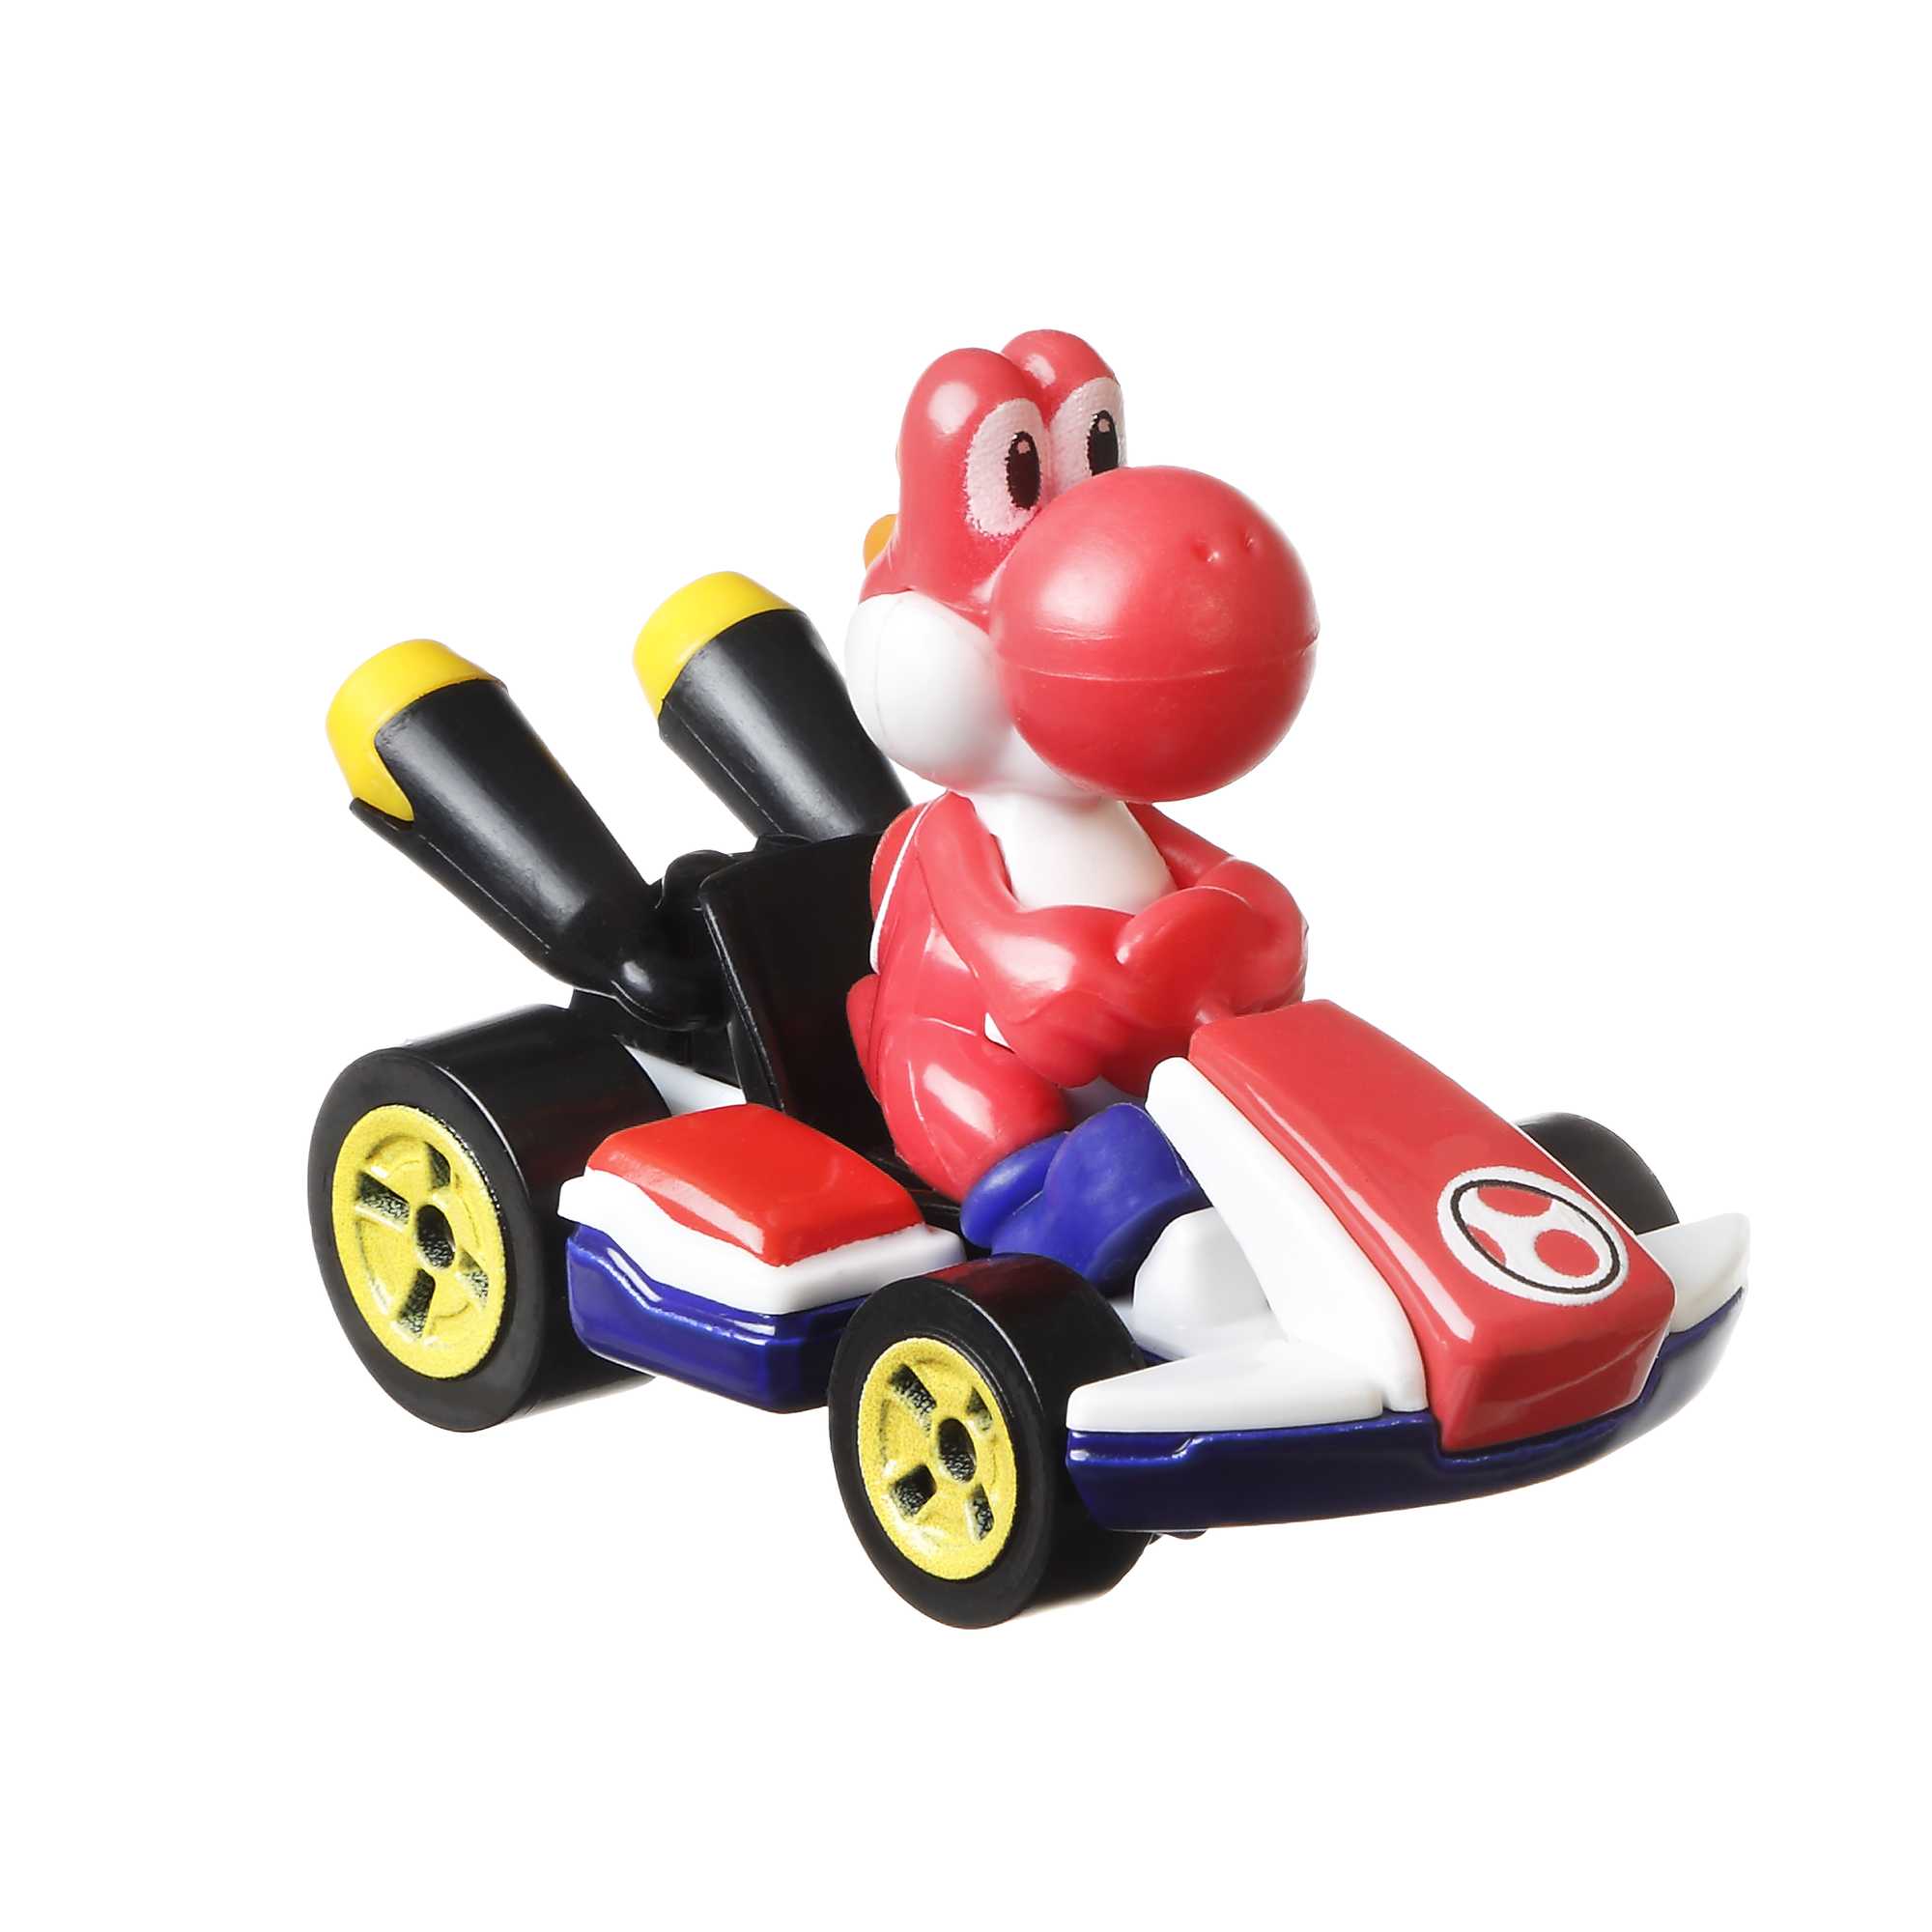 Hot Wheels Super Mario Bros Mariokart Bowser Standard Kart Toy Car –  Logan's Toy Chest